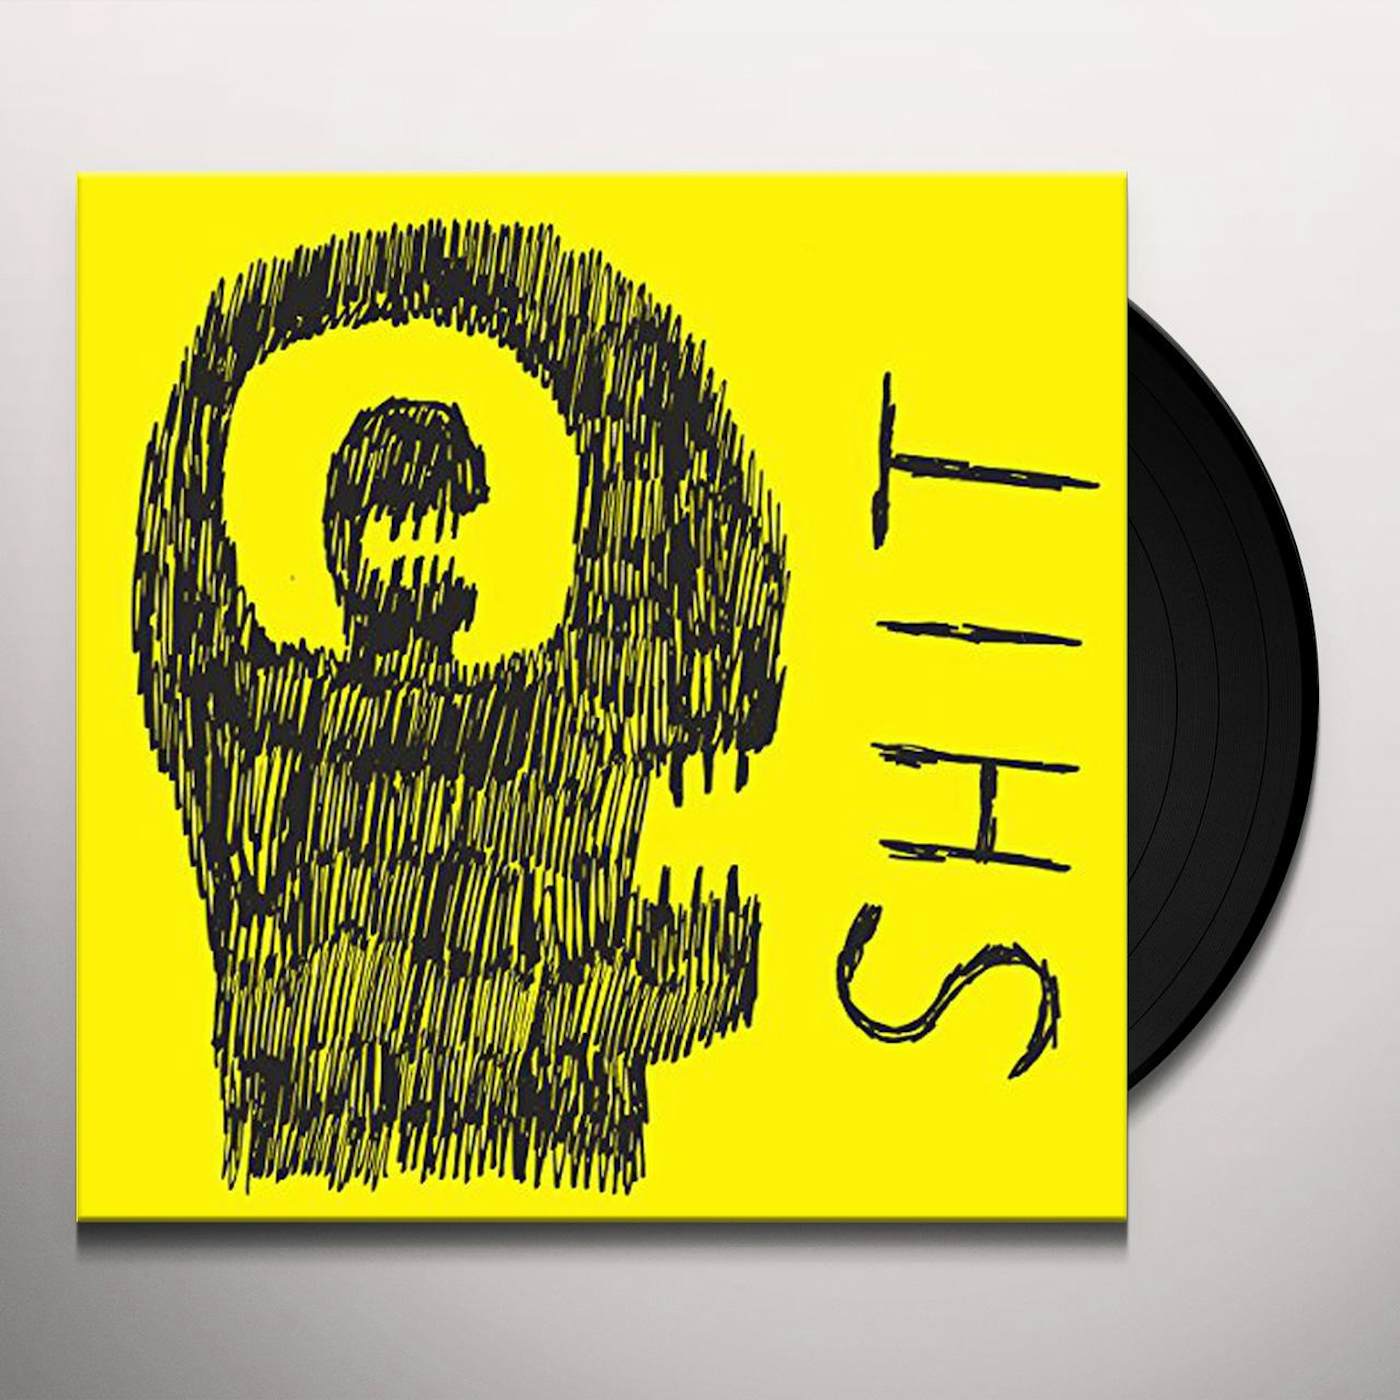 S.H.I.T. I. Vinyl Record